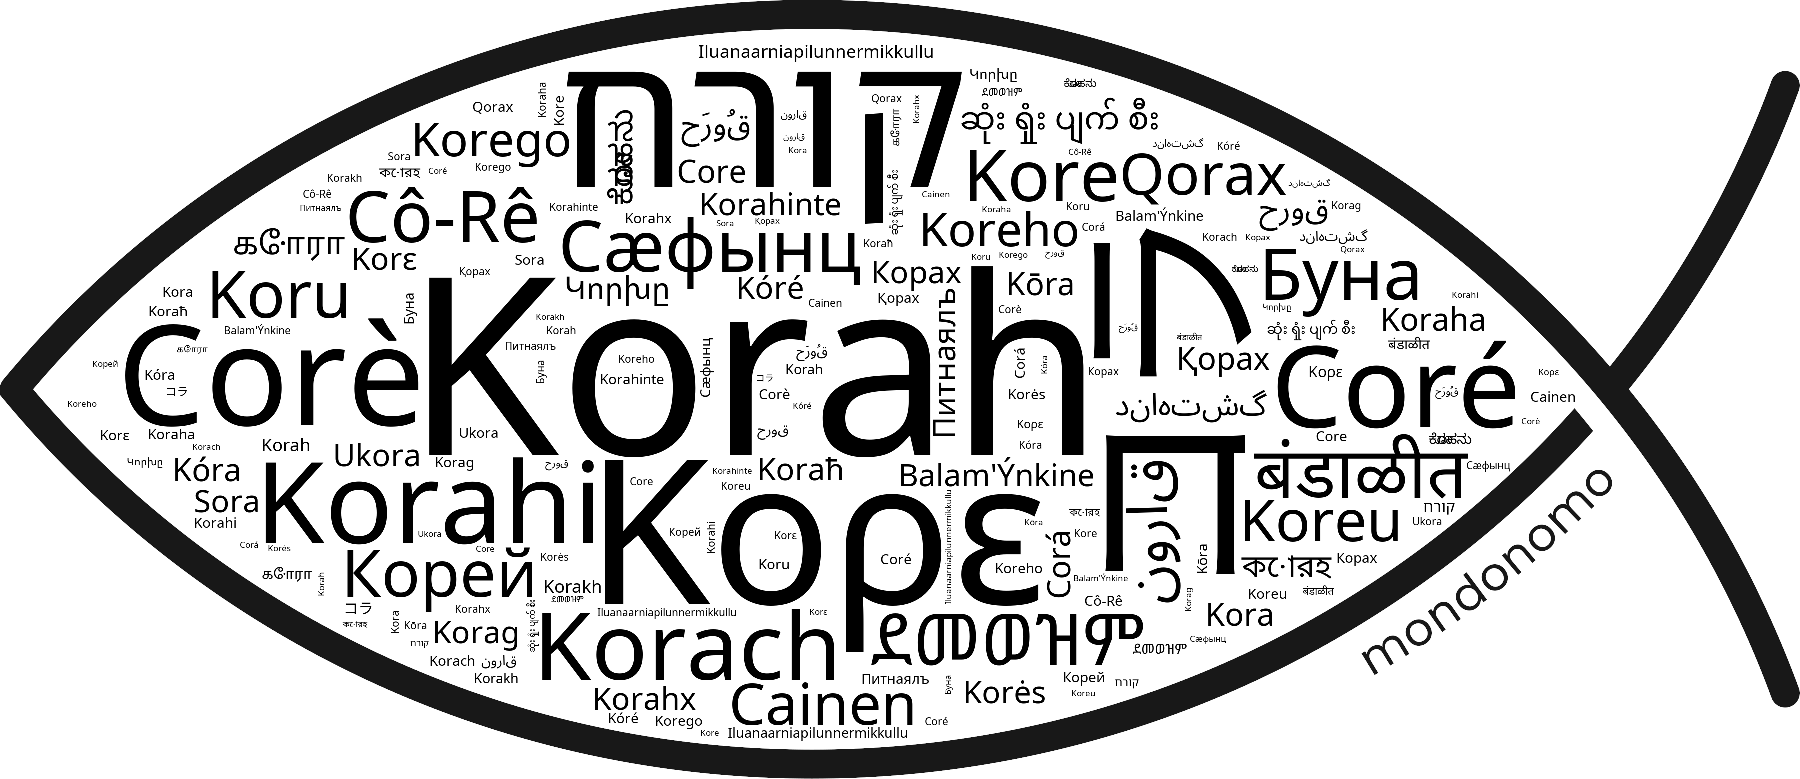 Name Korah in the world's Bibles